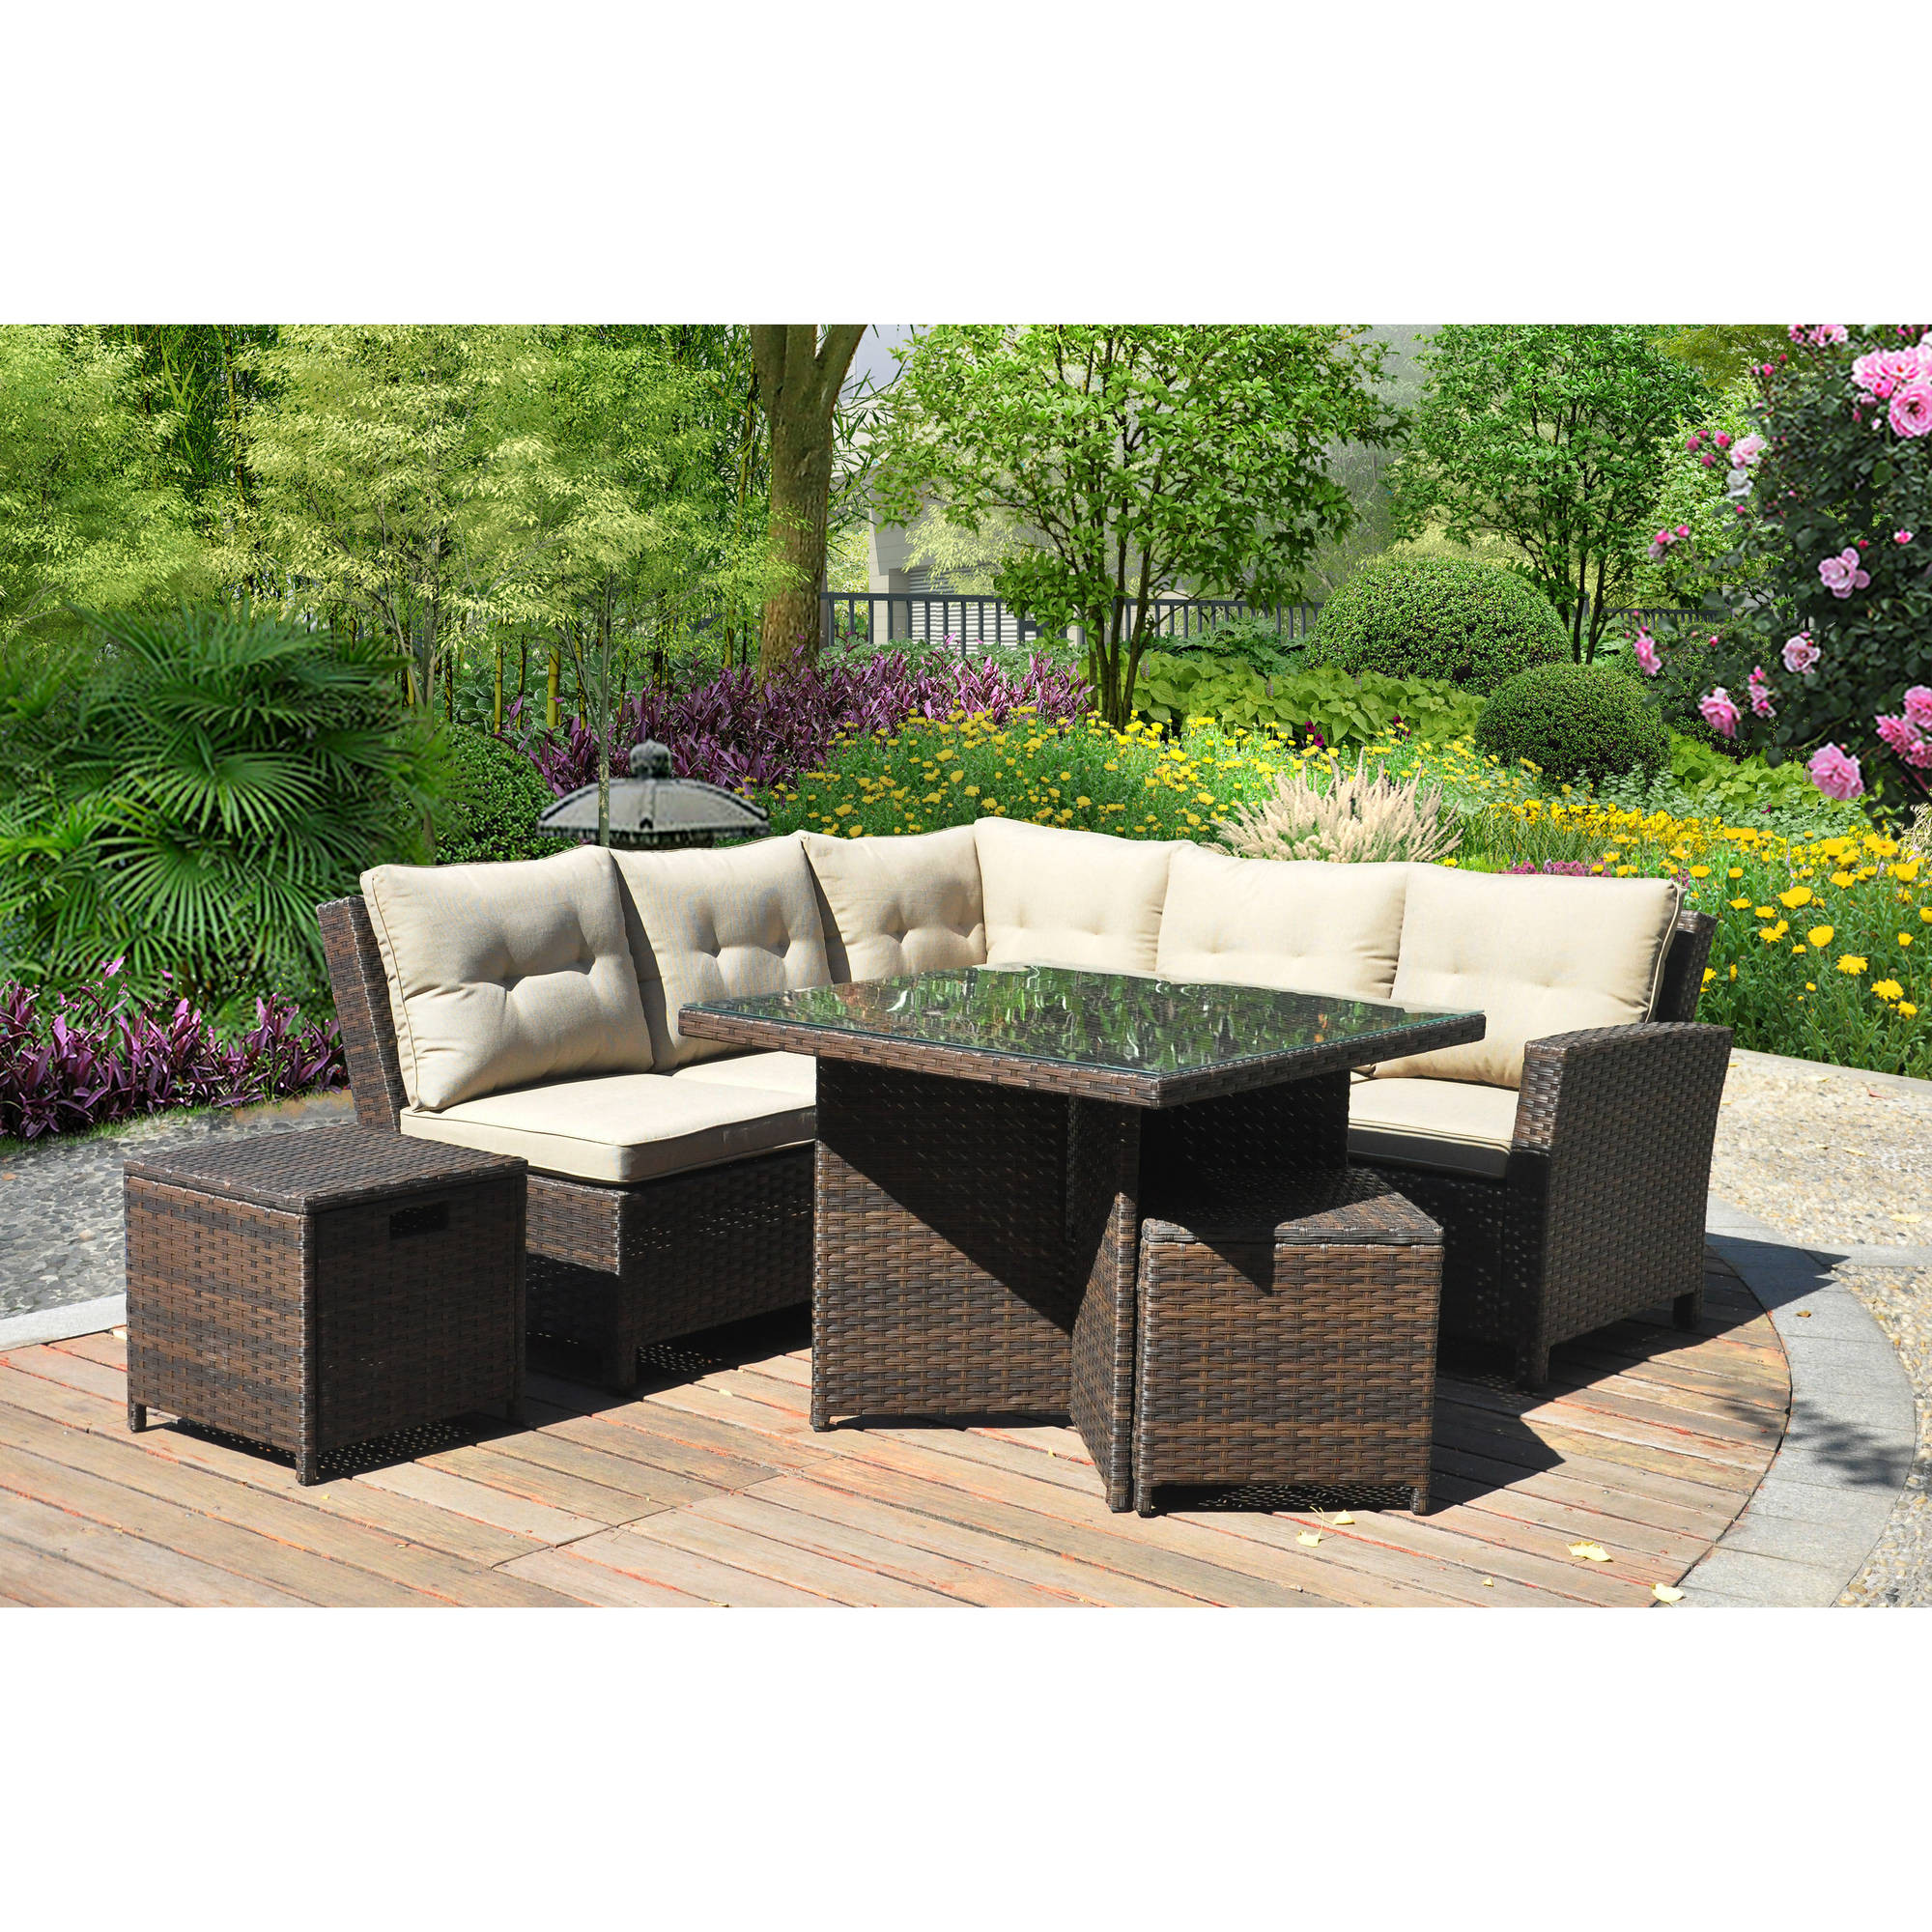 Backyard Furniture Sets
 Hampton 5 Piece Outdoor Wicker Patio Furniture Set 05b